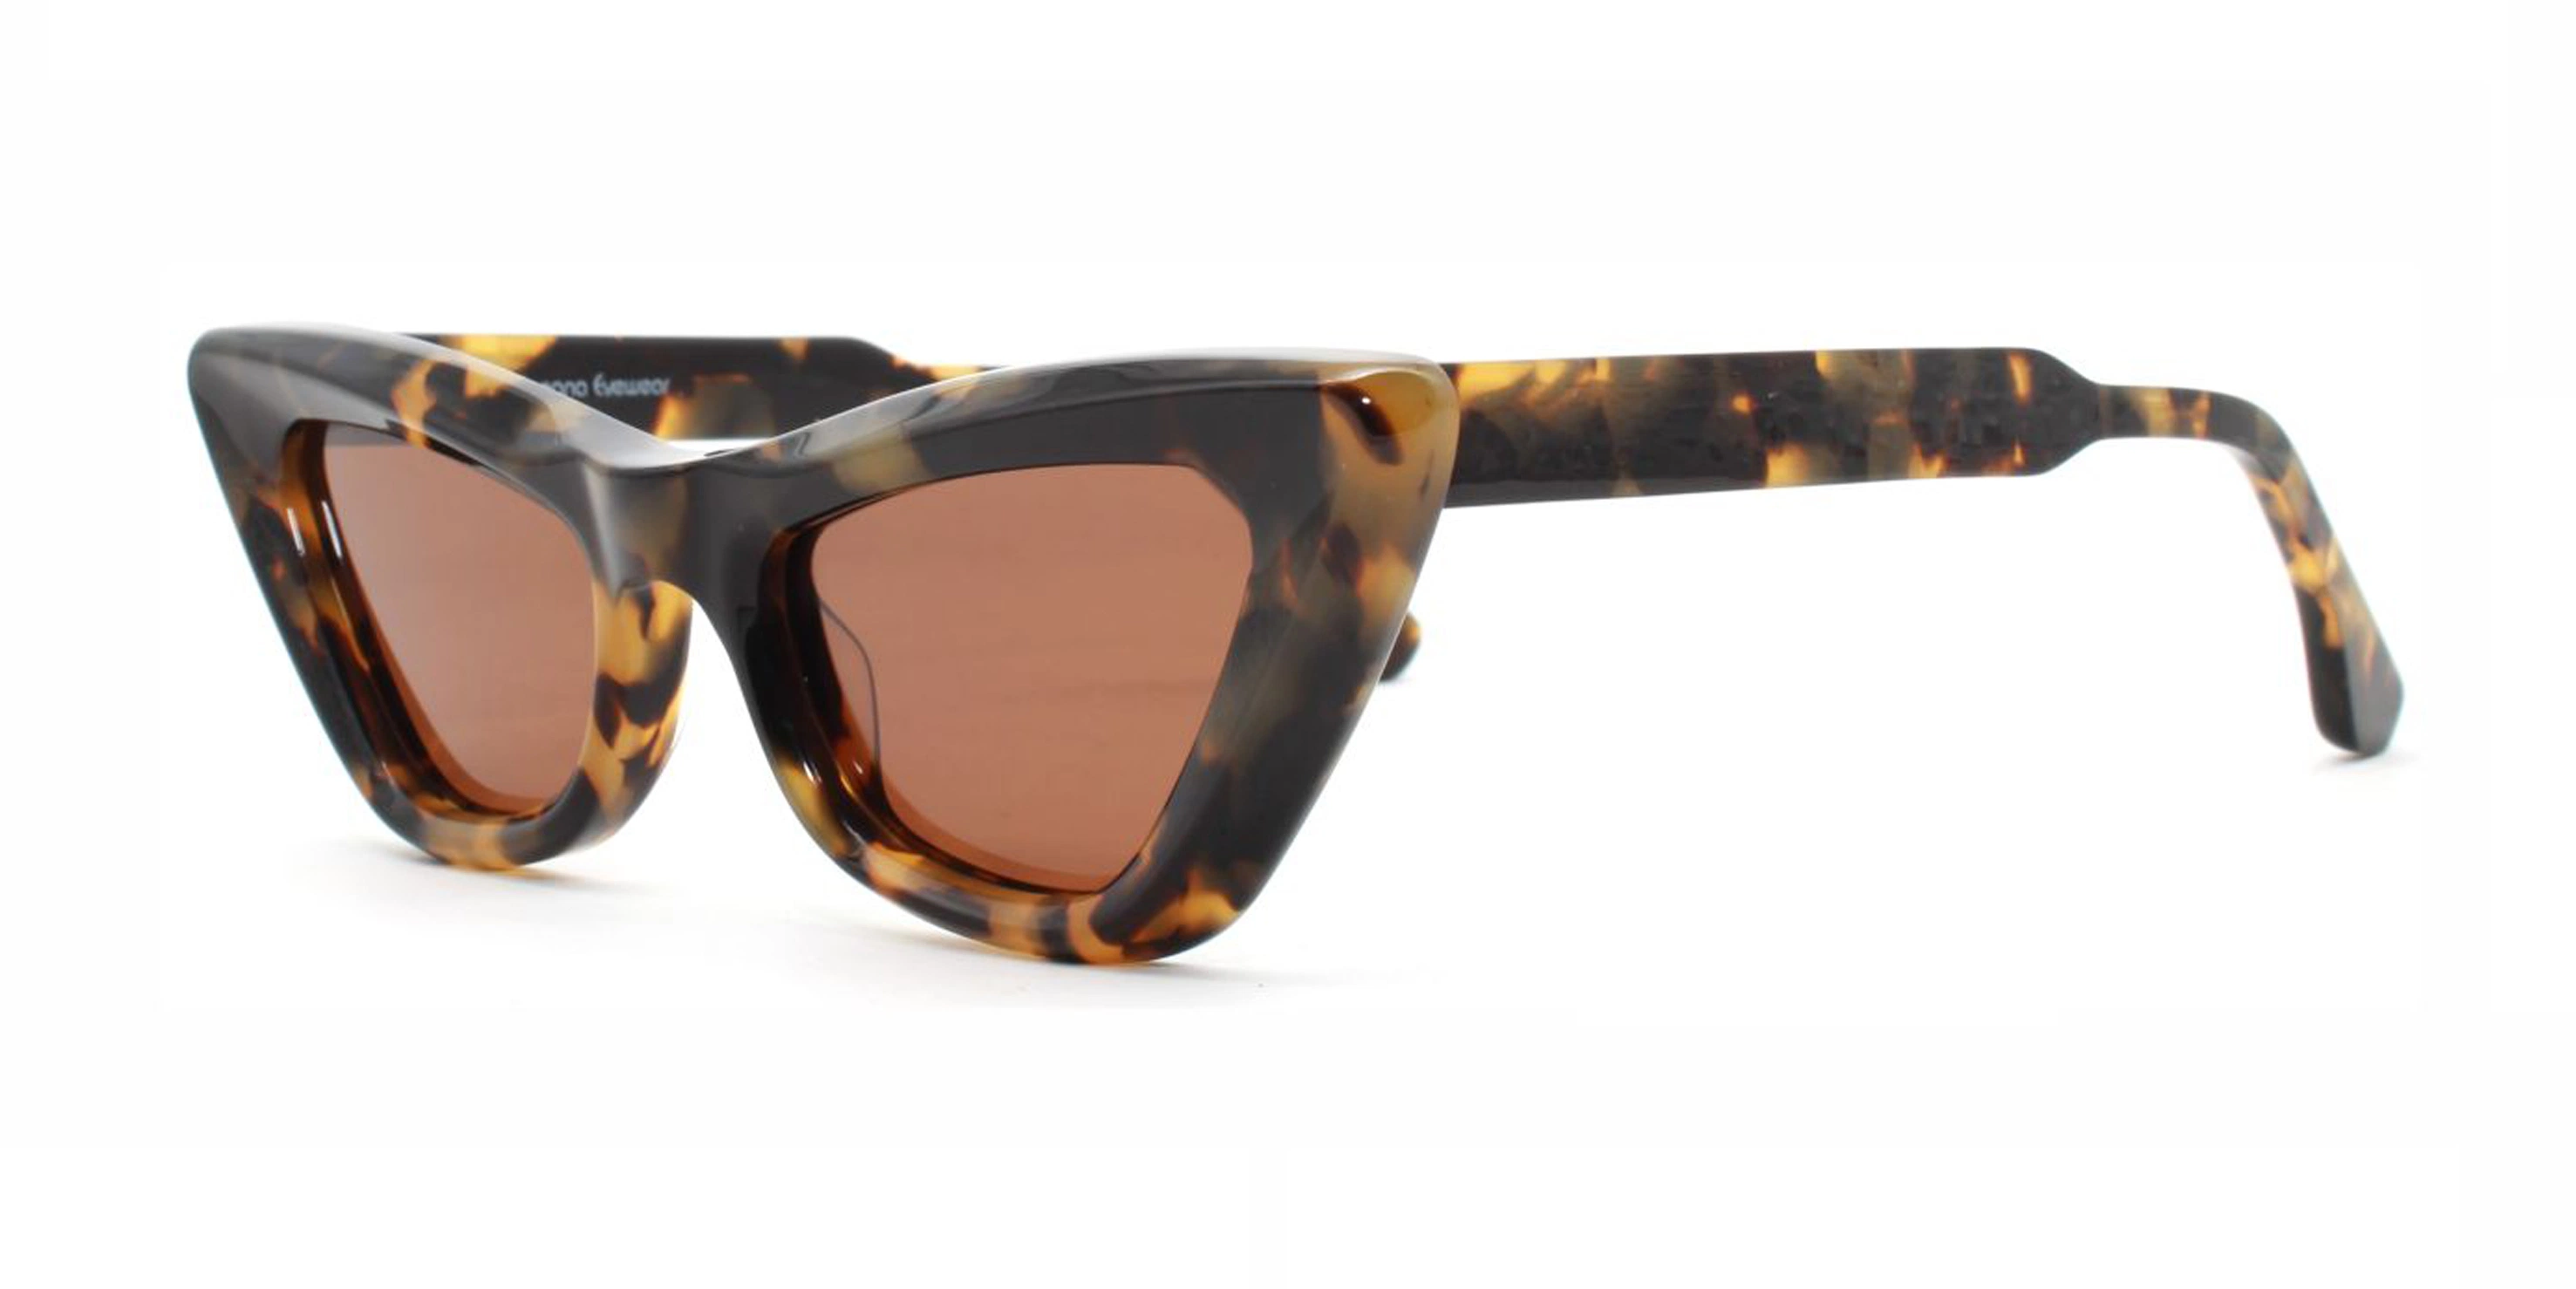 New Bio-Acetate Eco-Glasses Hot Sale Fashion Cat Eye Acetate Sunglasses for Lady